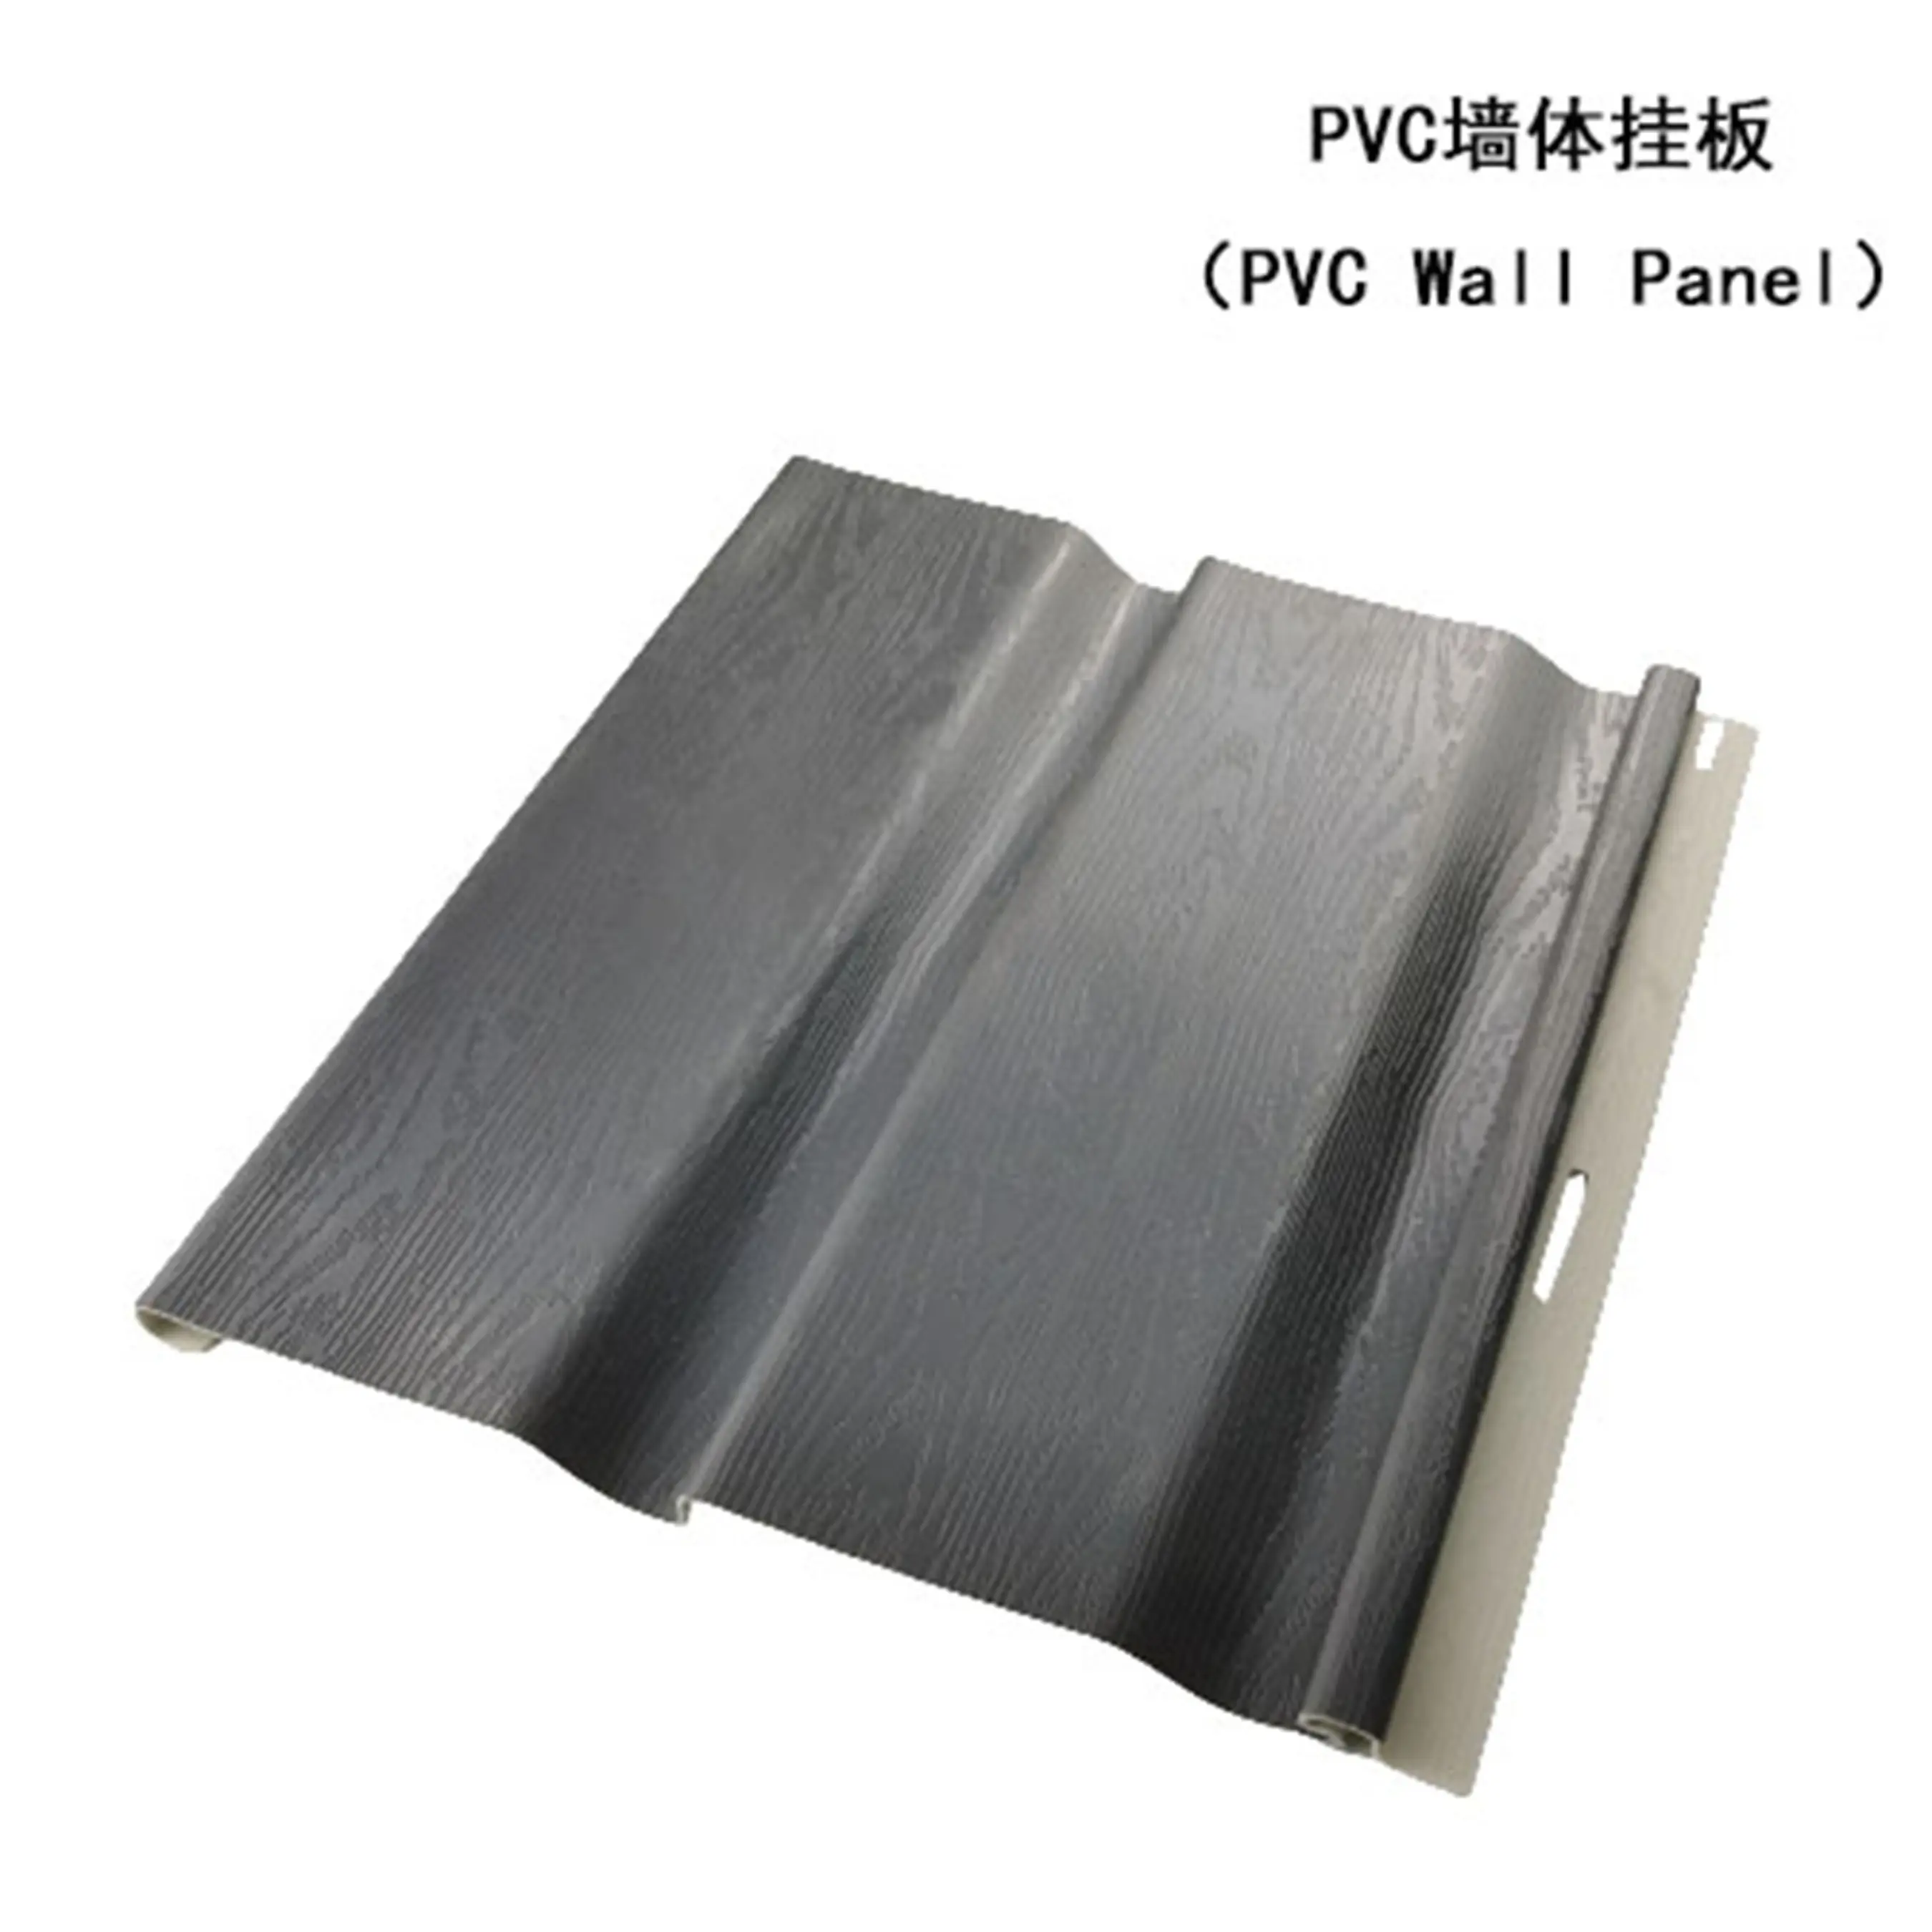 חיפוי קיר PVC ויניל מפלסטיק חיצוני/פאנל קיר חיצוני PVC לוילה